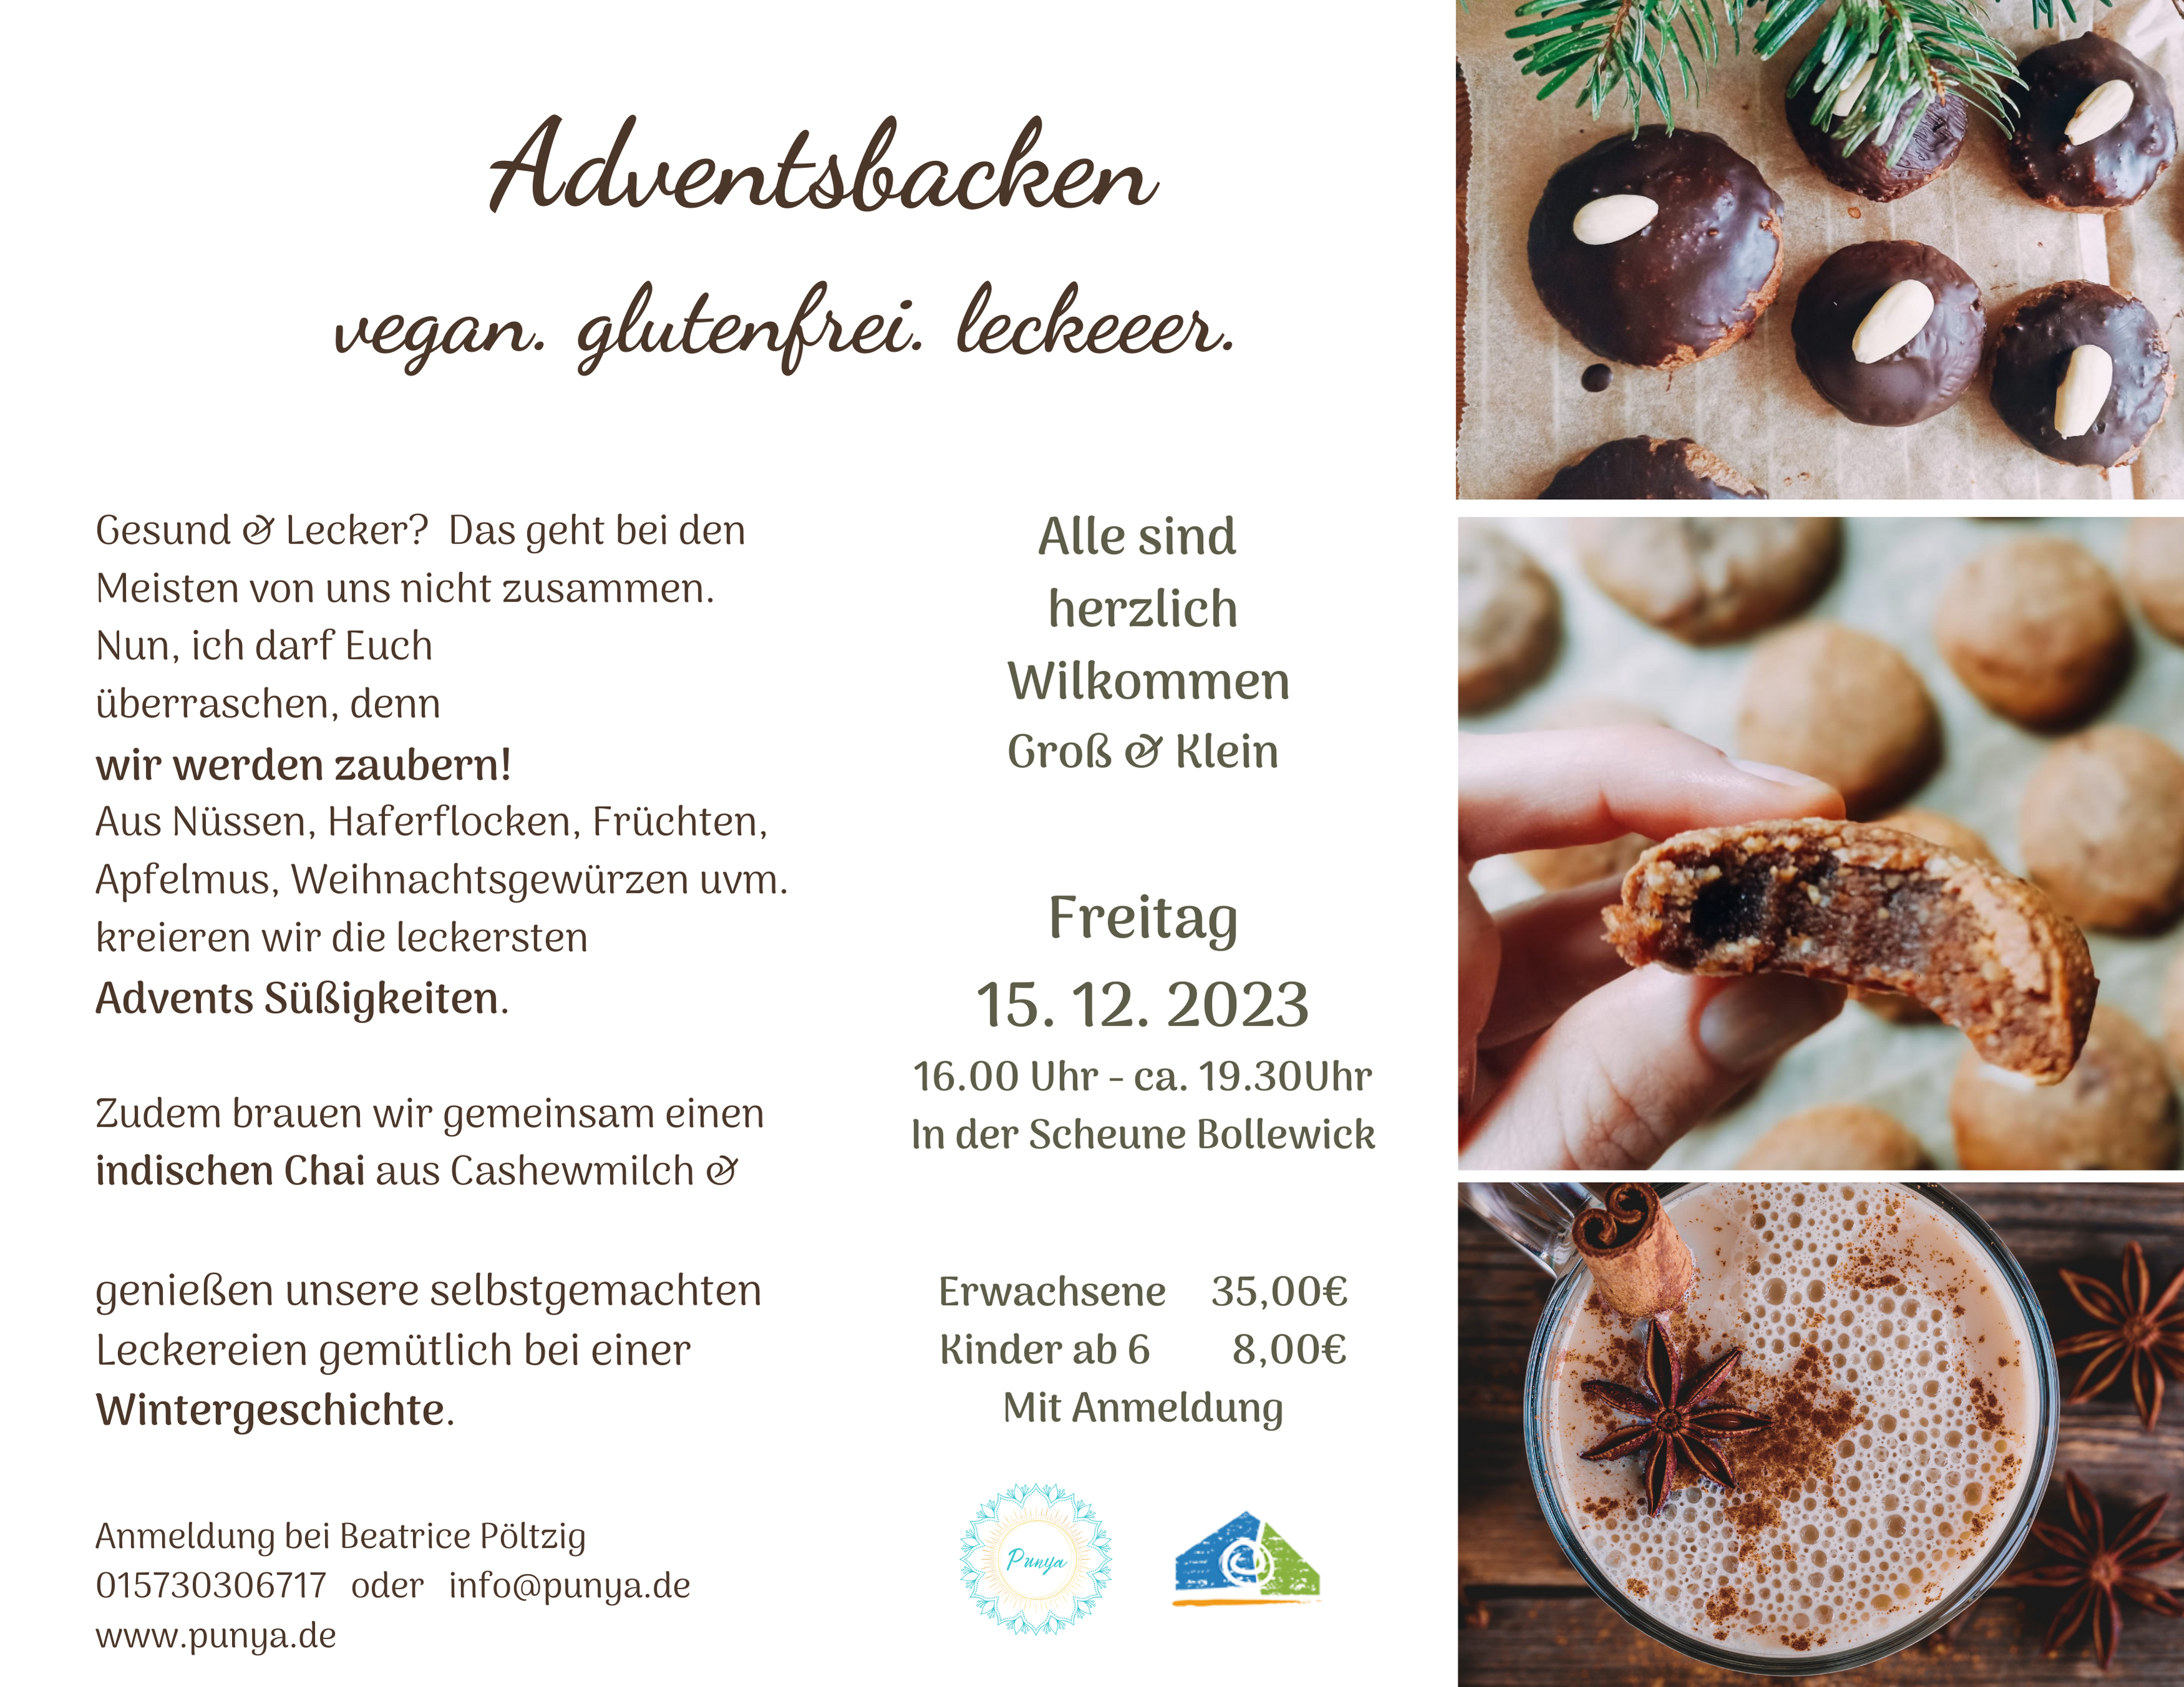 You are currently viewing Adventsbacken: vegan. glutenfrei. lecker.